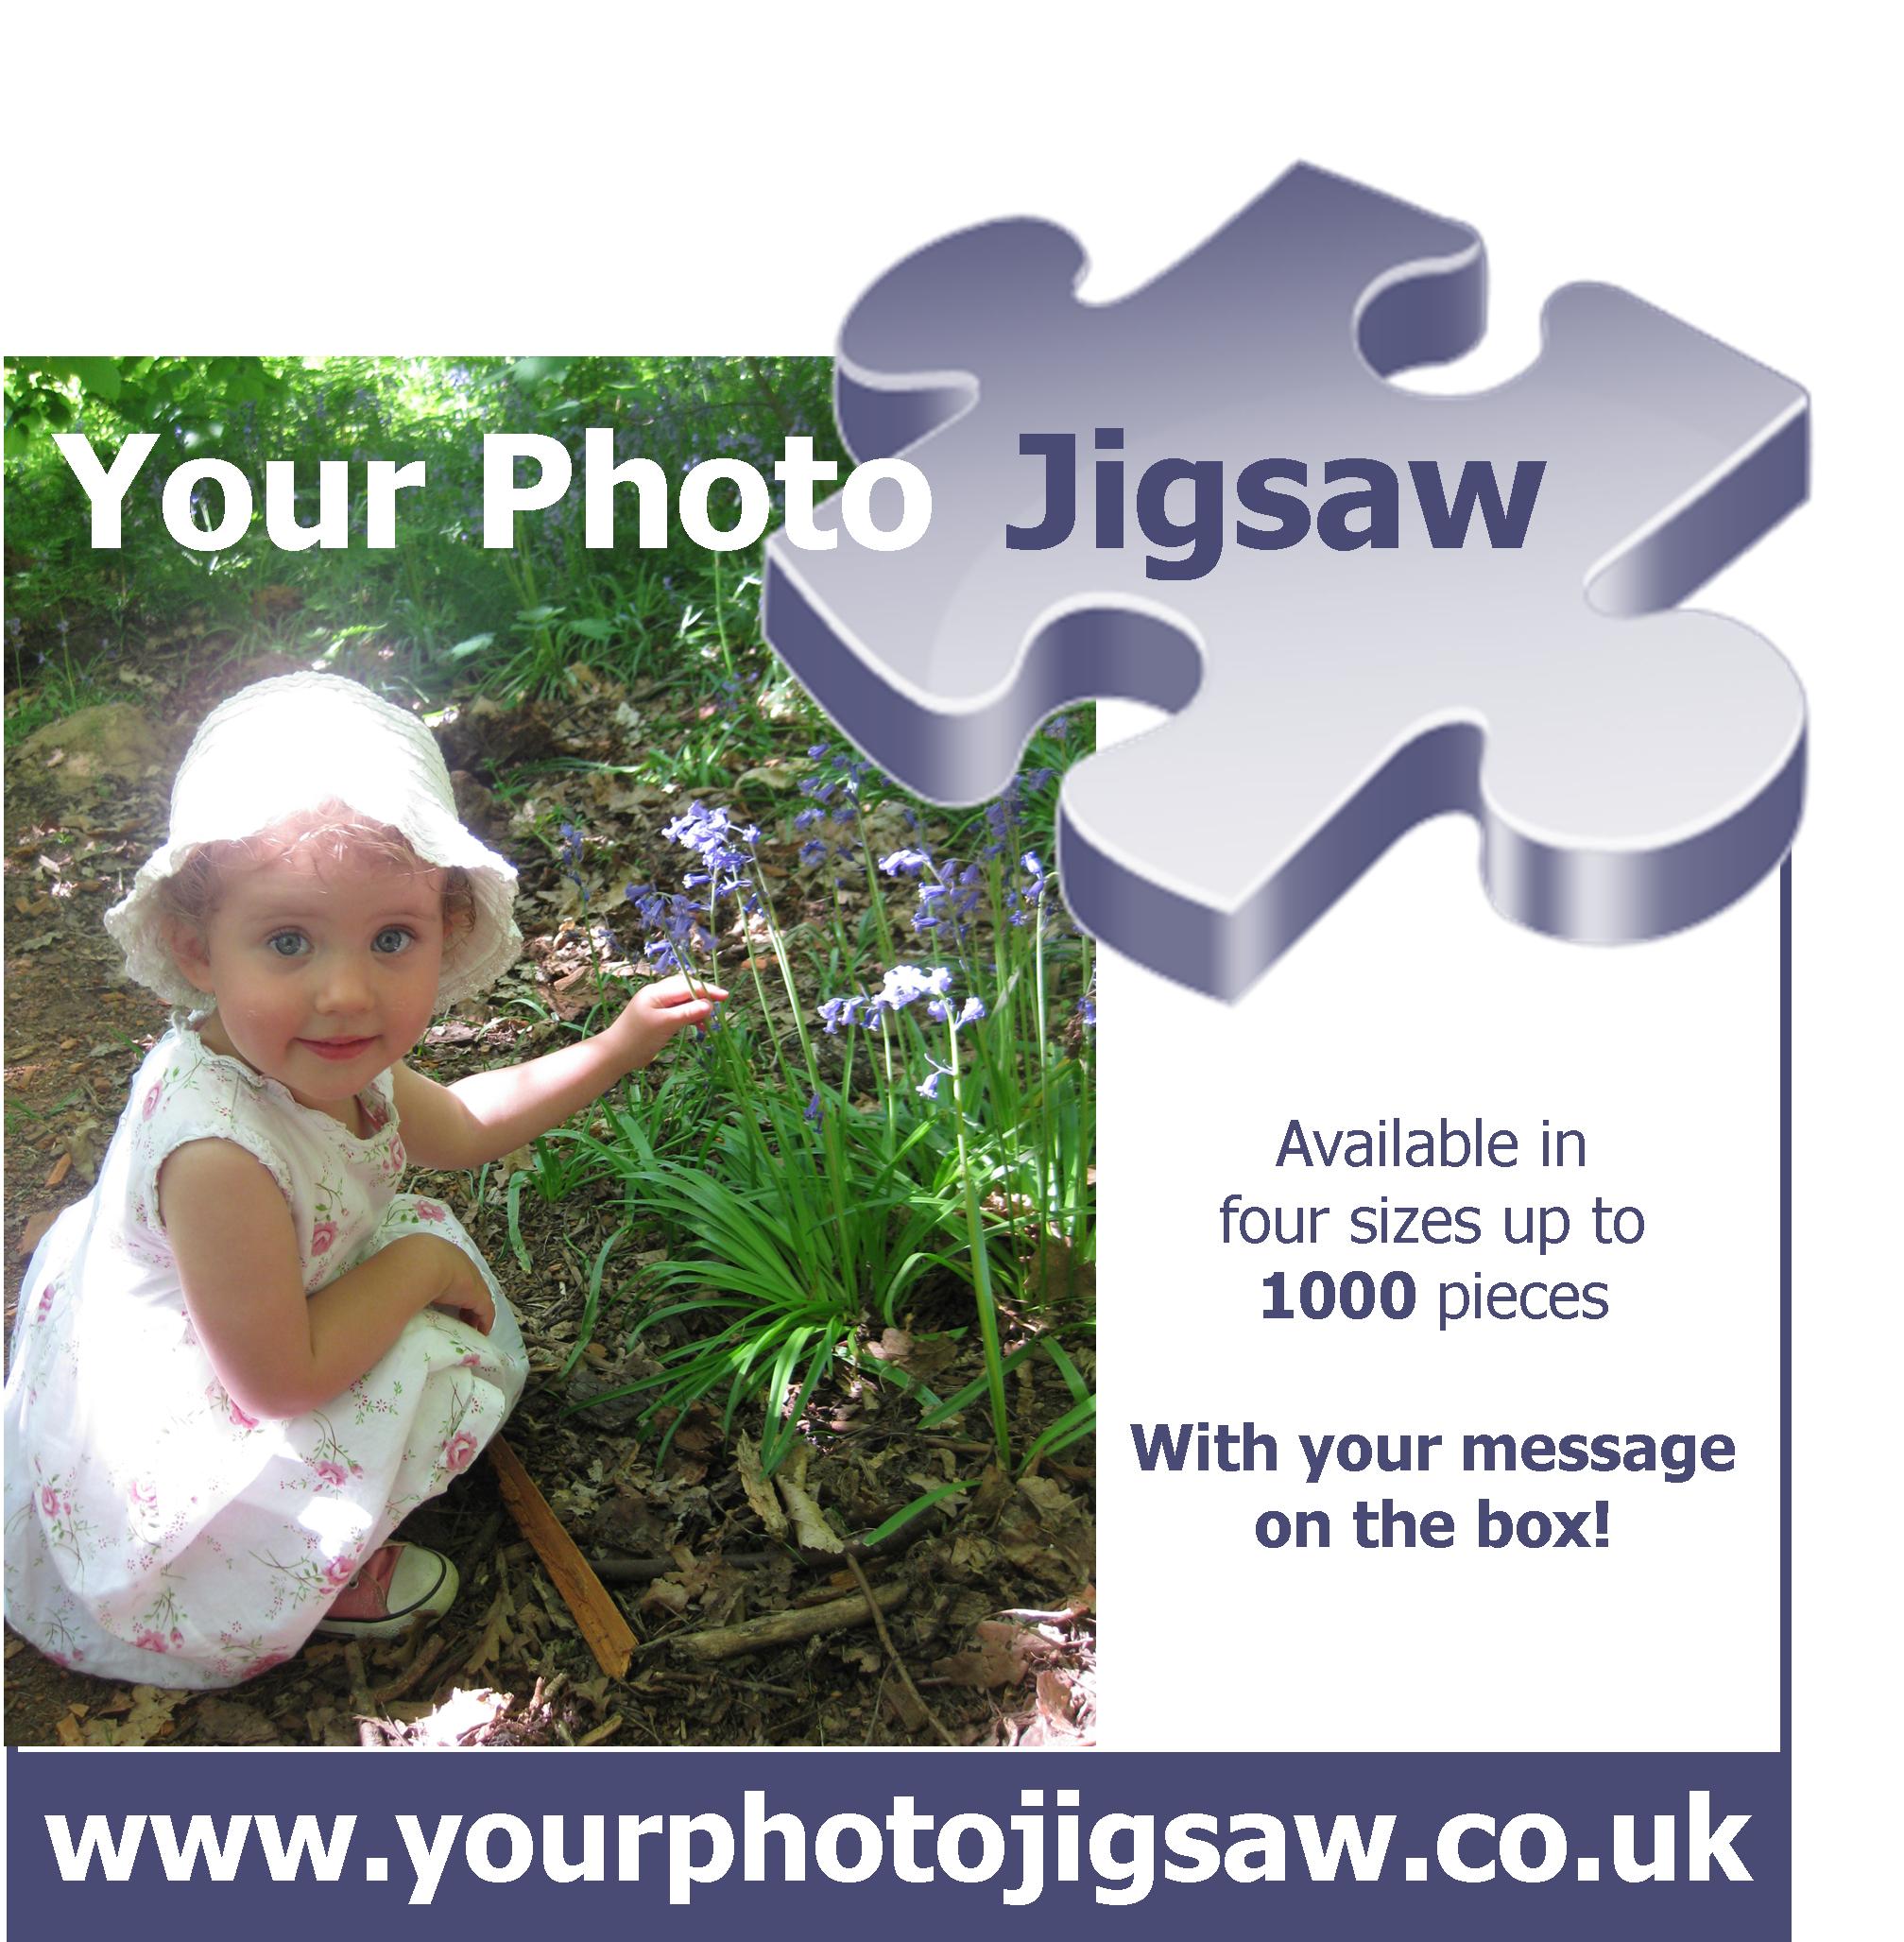 Your Photo Jigsaw